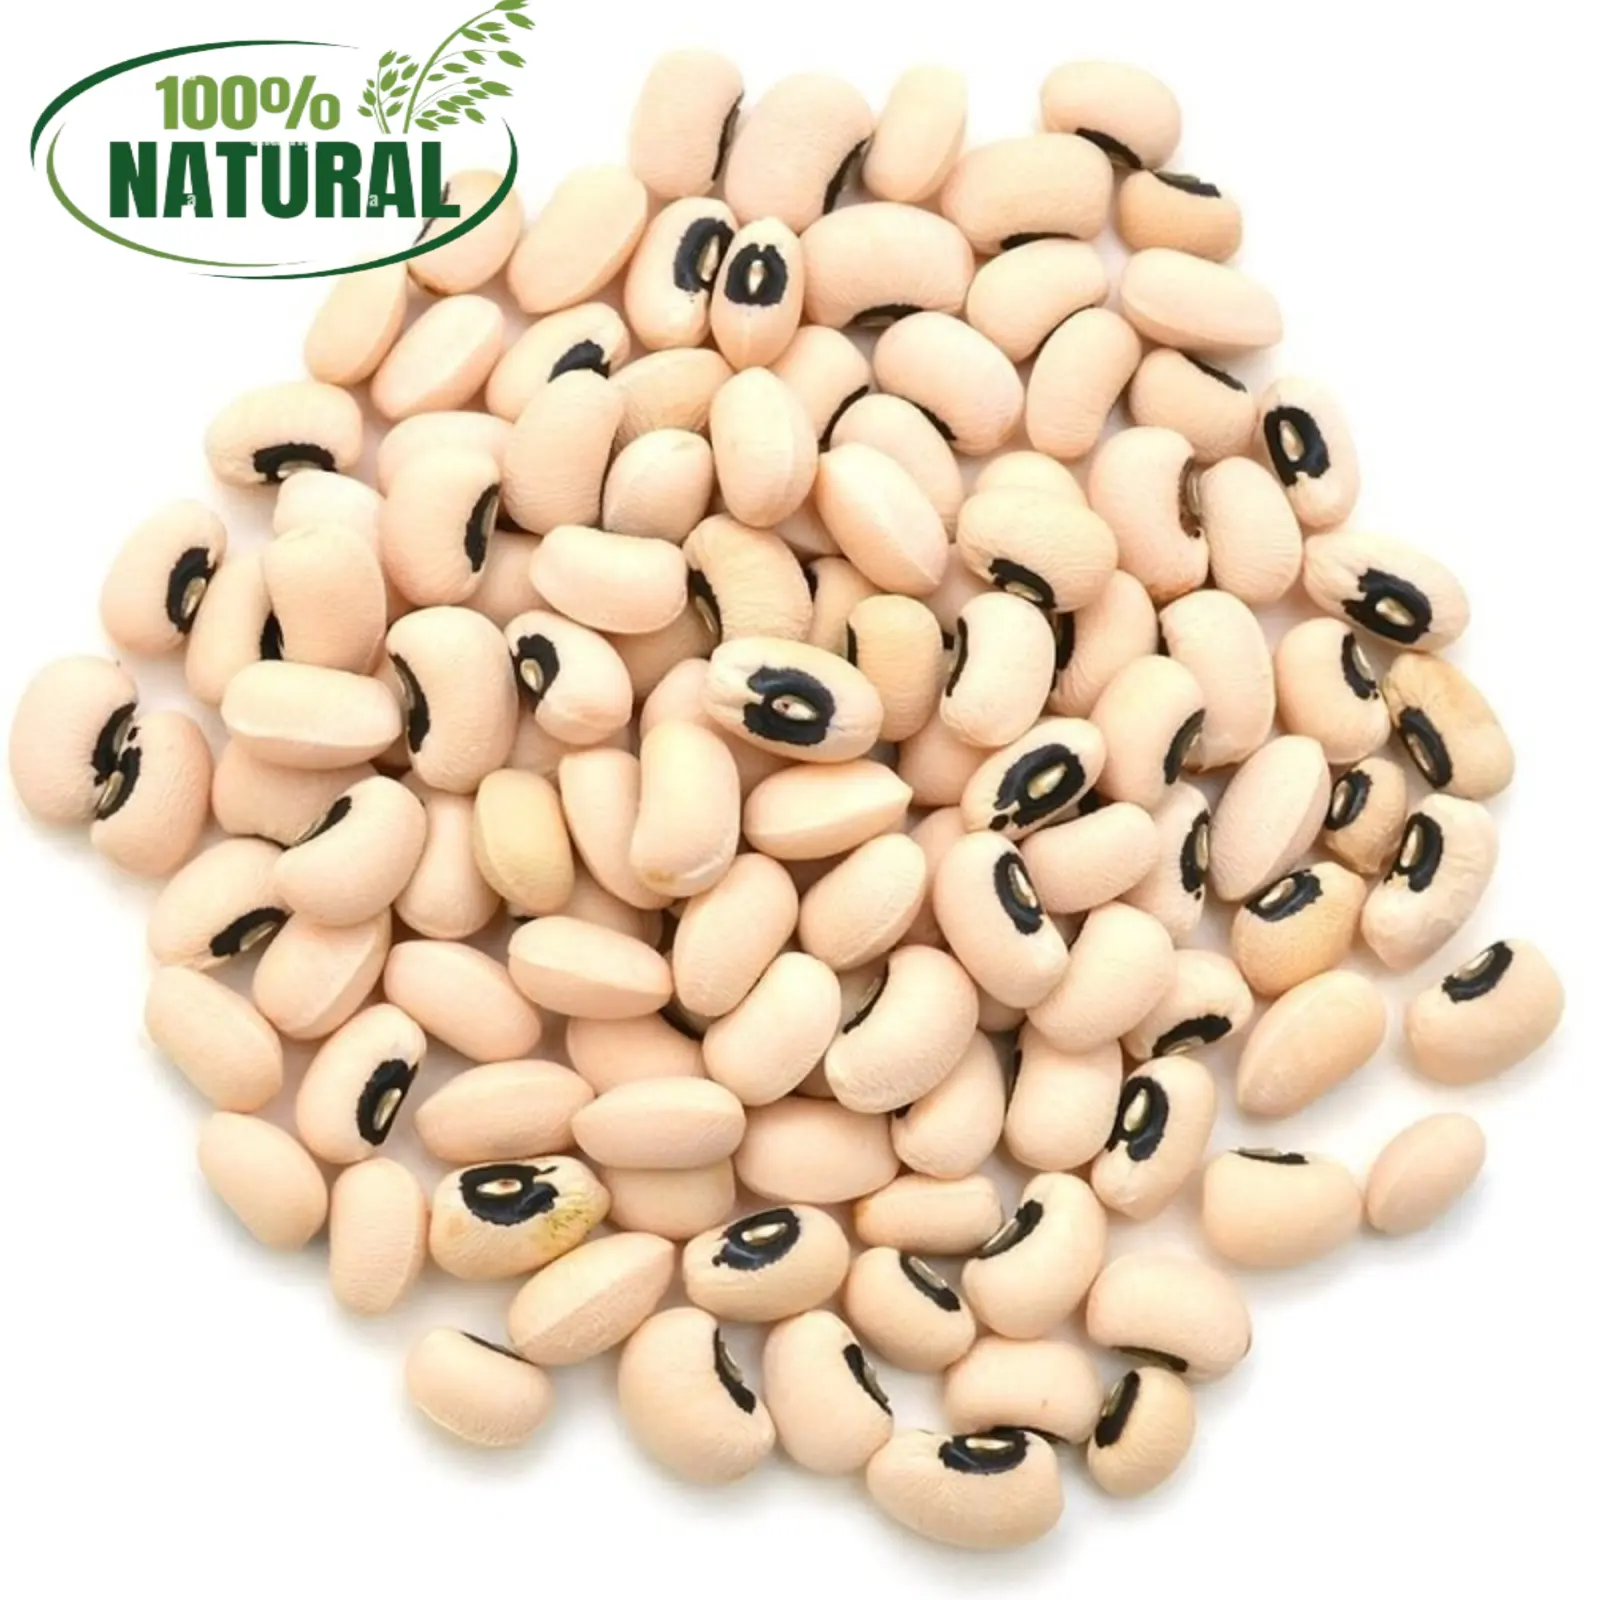 Highest quality Non gmo Natural Dry Black eye Beans Product Bulk Black eye Kidney Bean for food Cheap Price